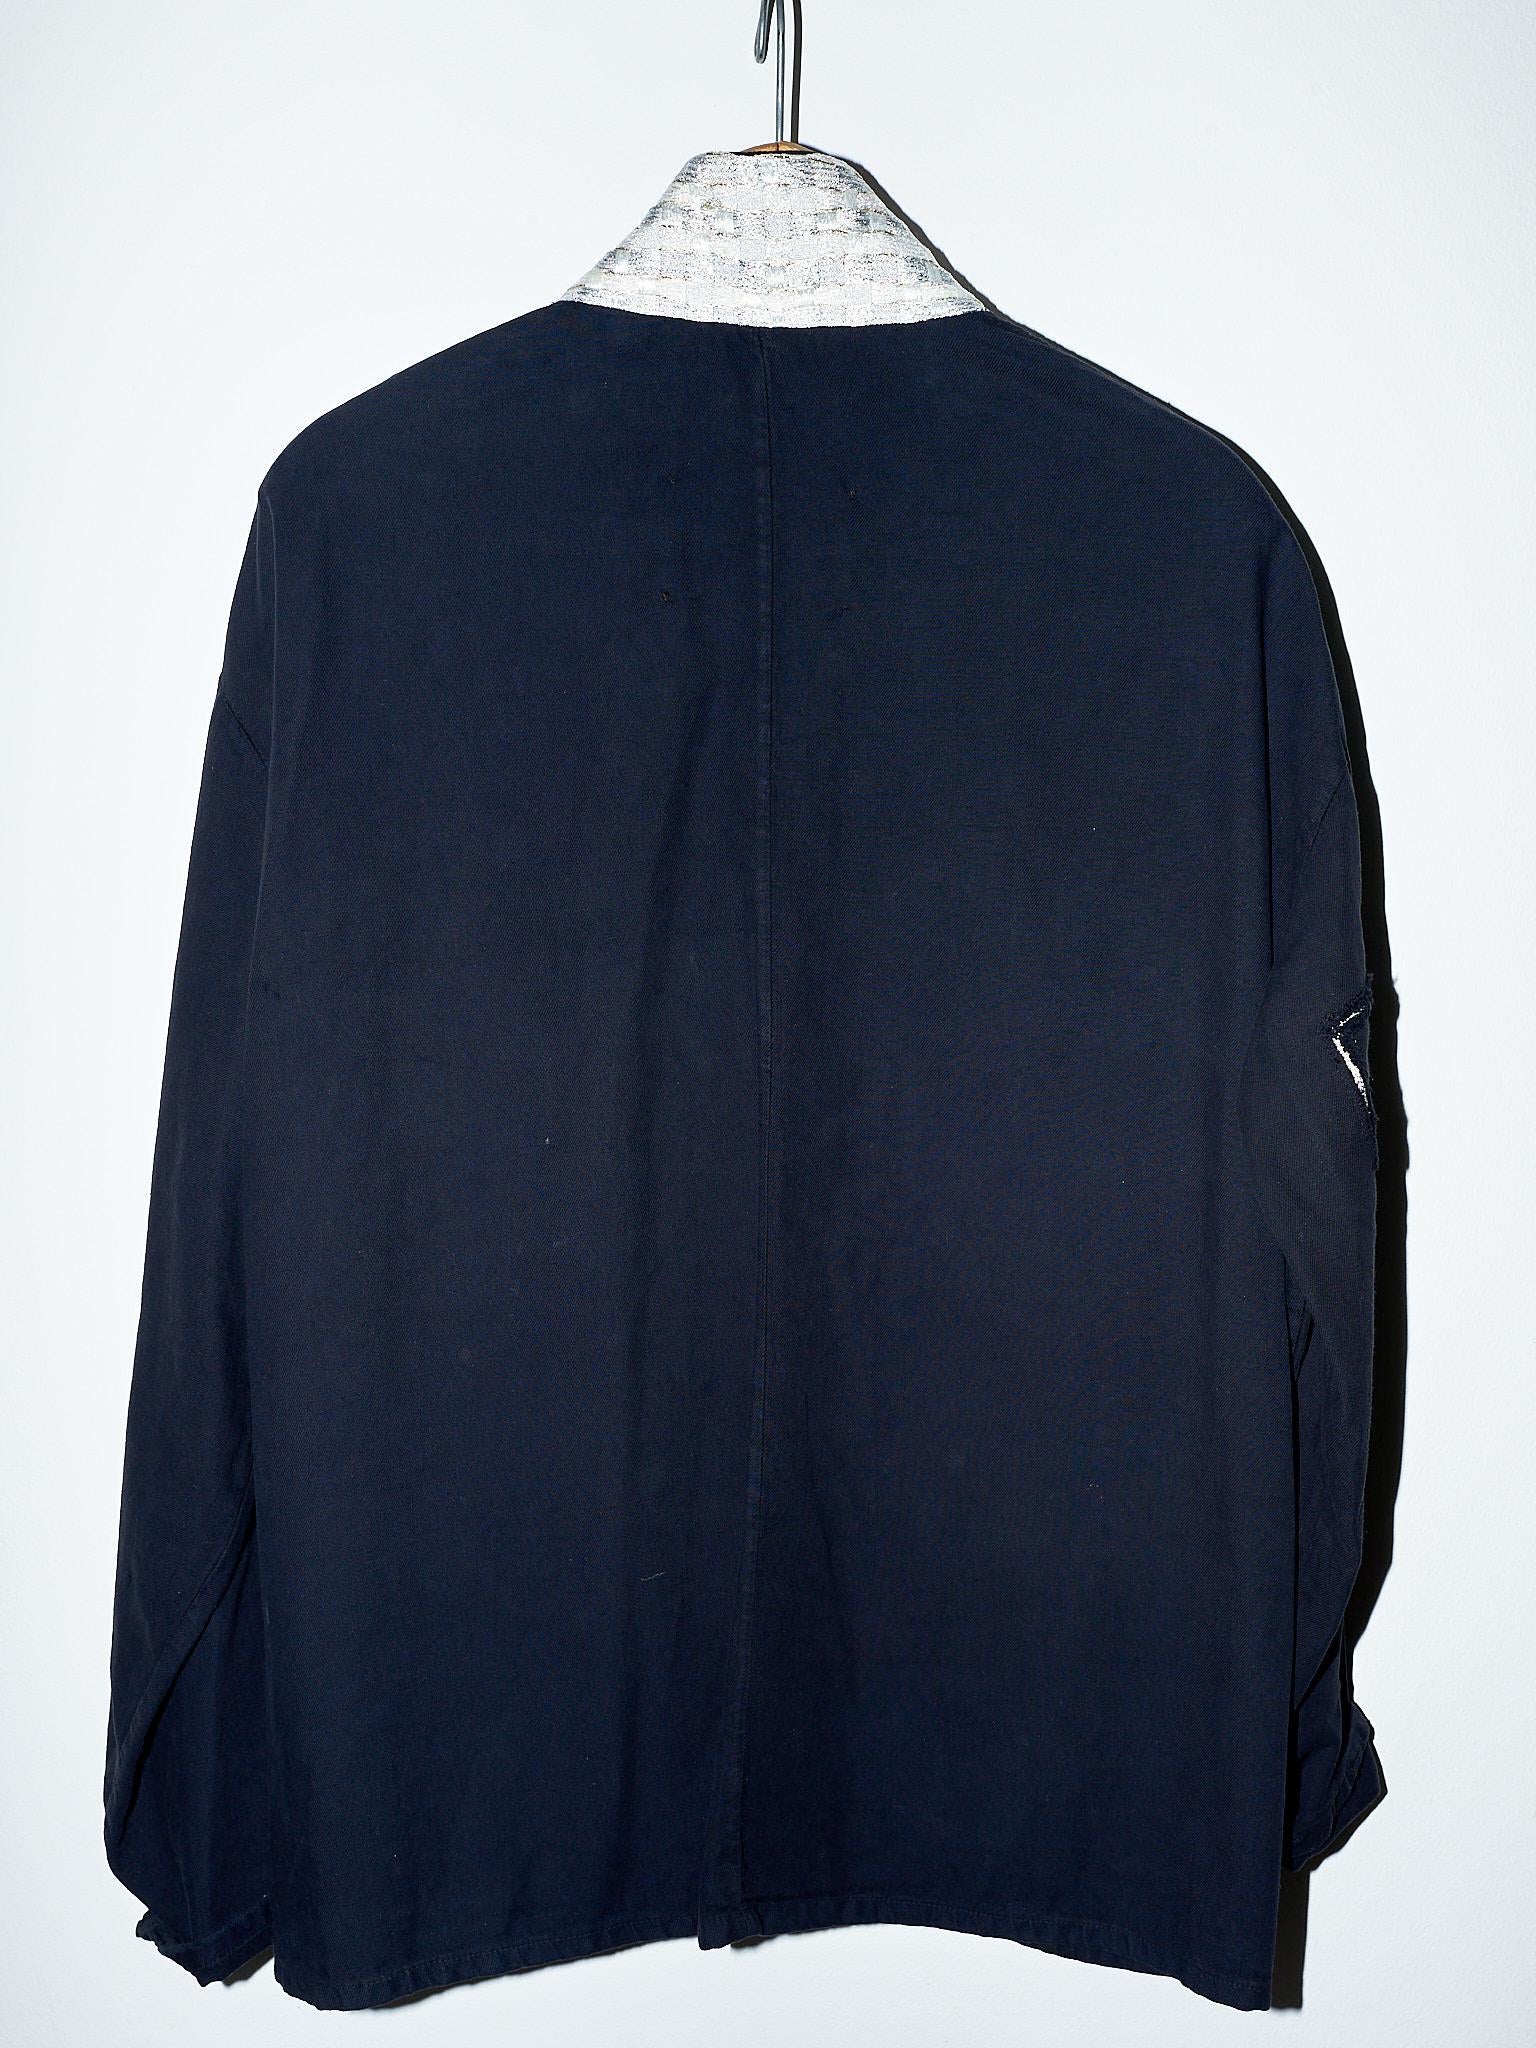 Black Jacket Lurex Tweed Pockets Large Cotton J Dauphin For Sale 2